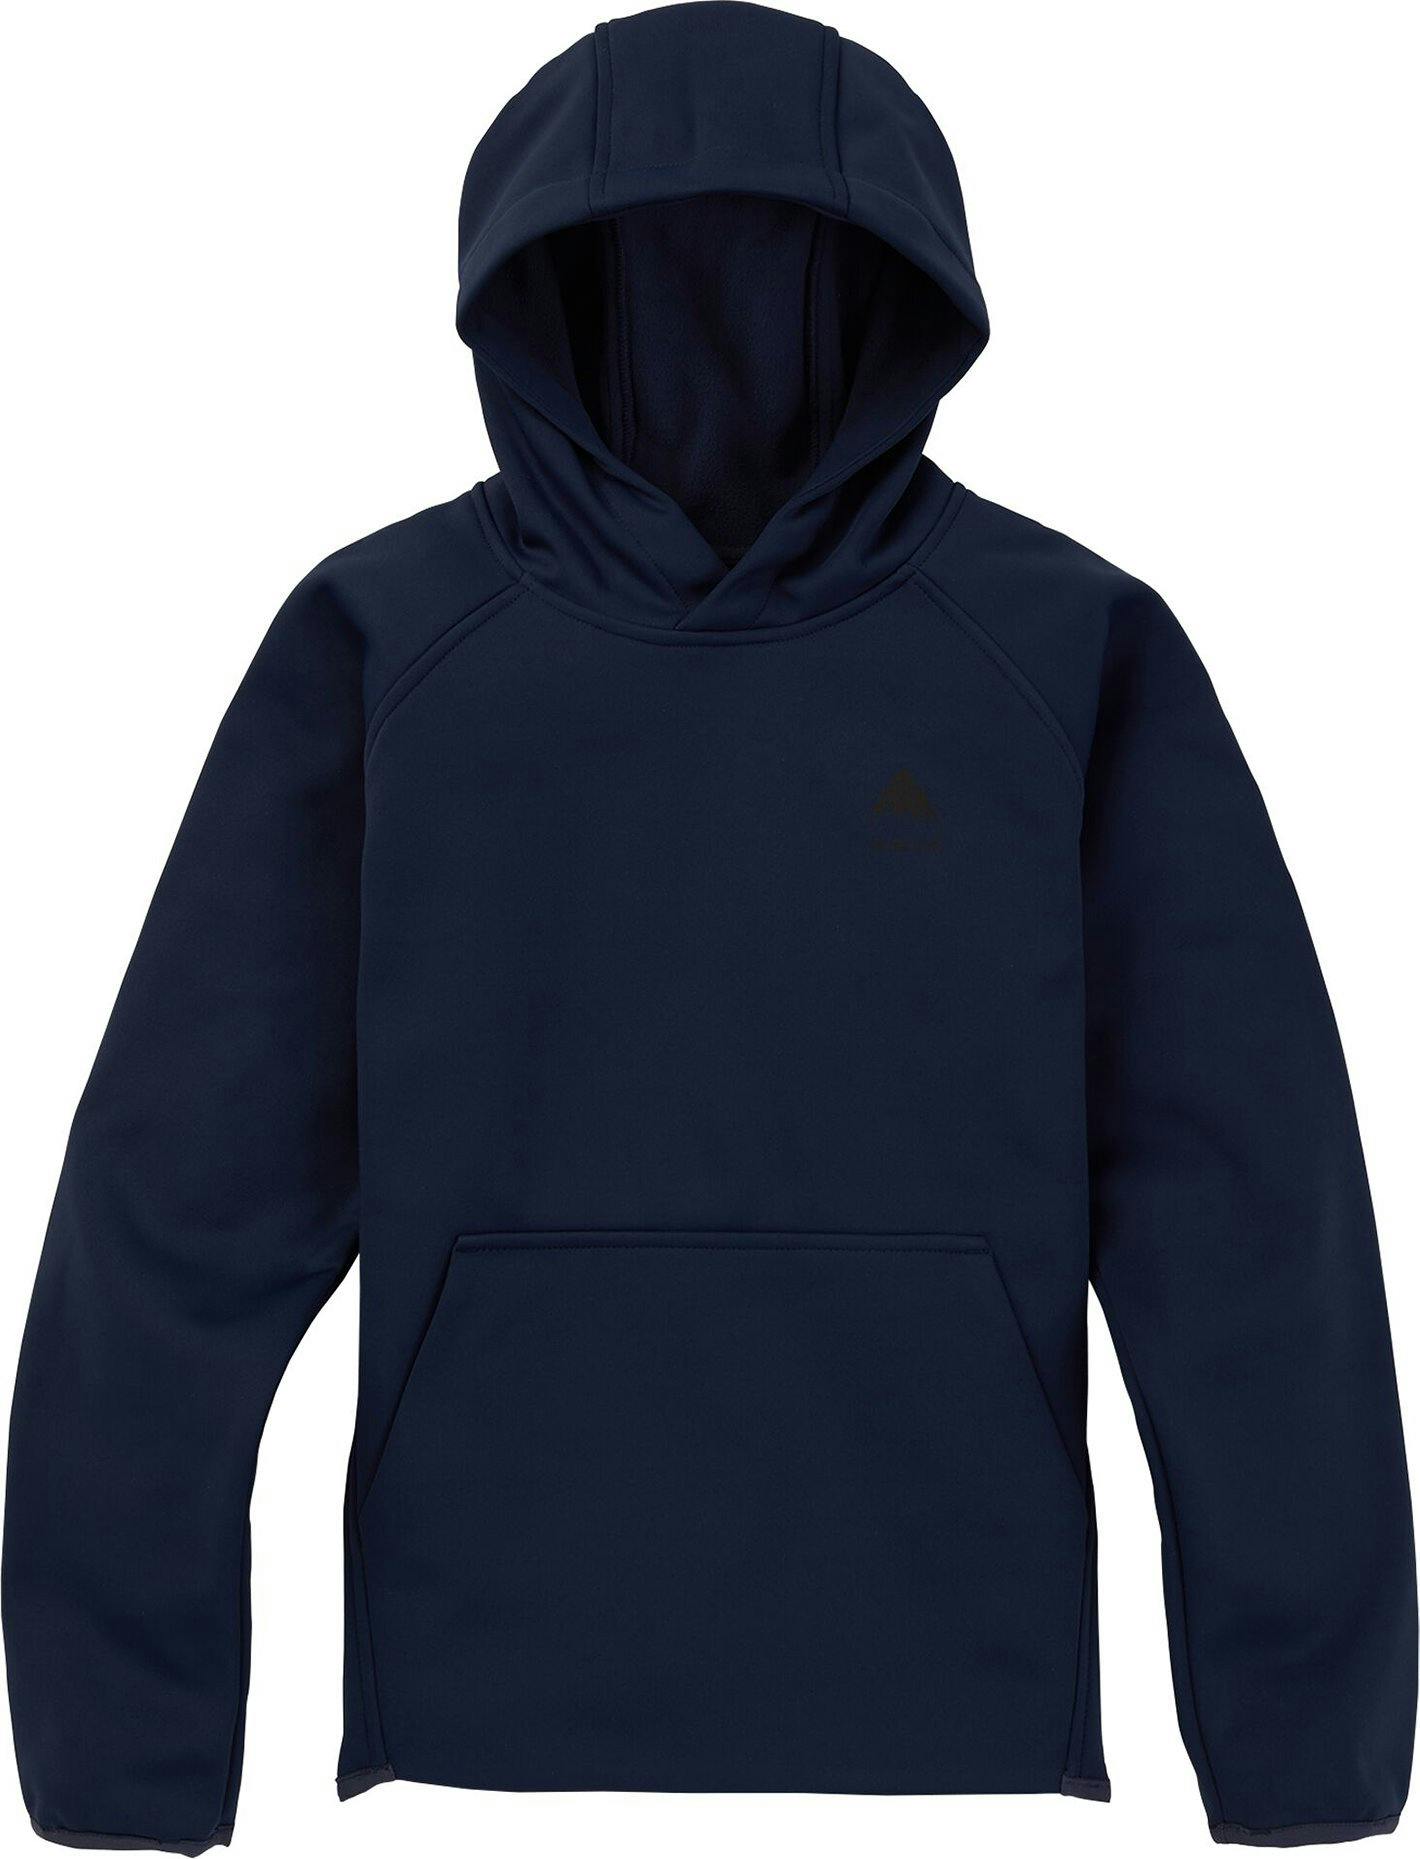 Product image for Crown Weatherproof Pullover Fleece - Kids